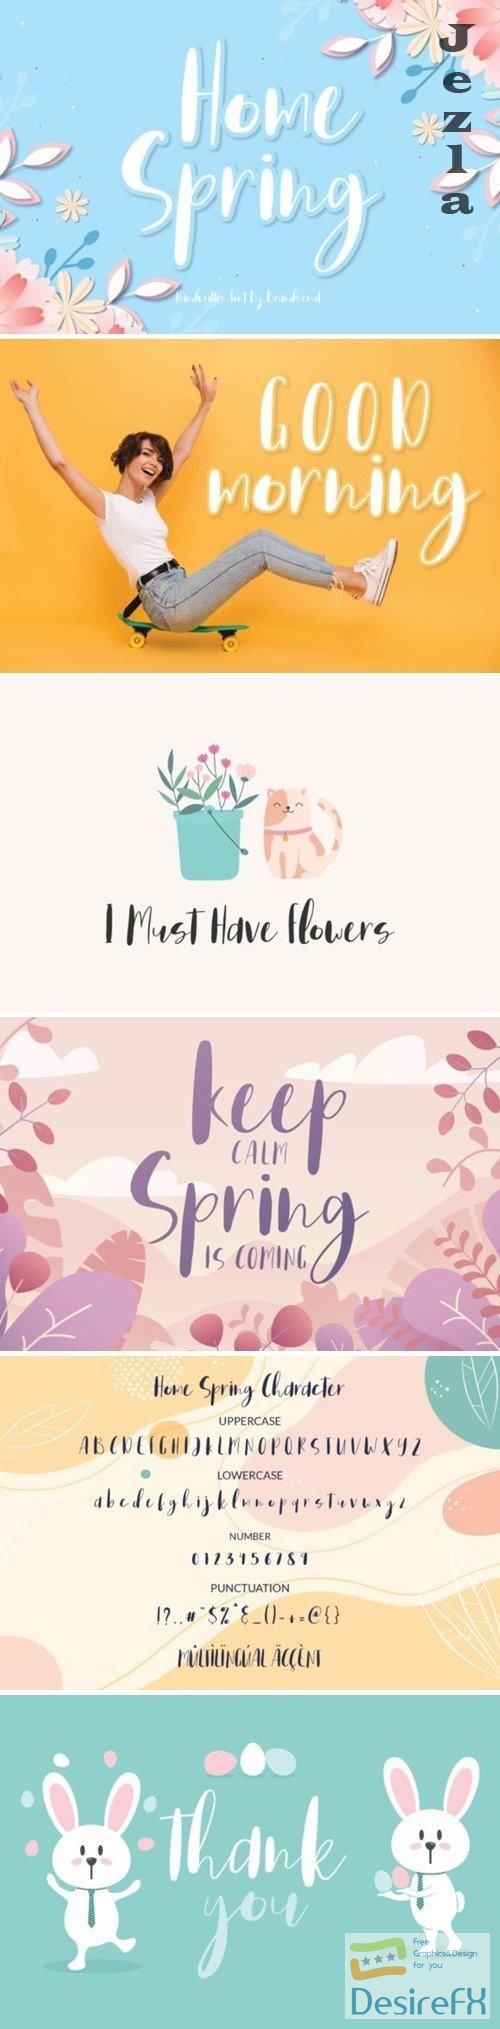 Home Spring Font